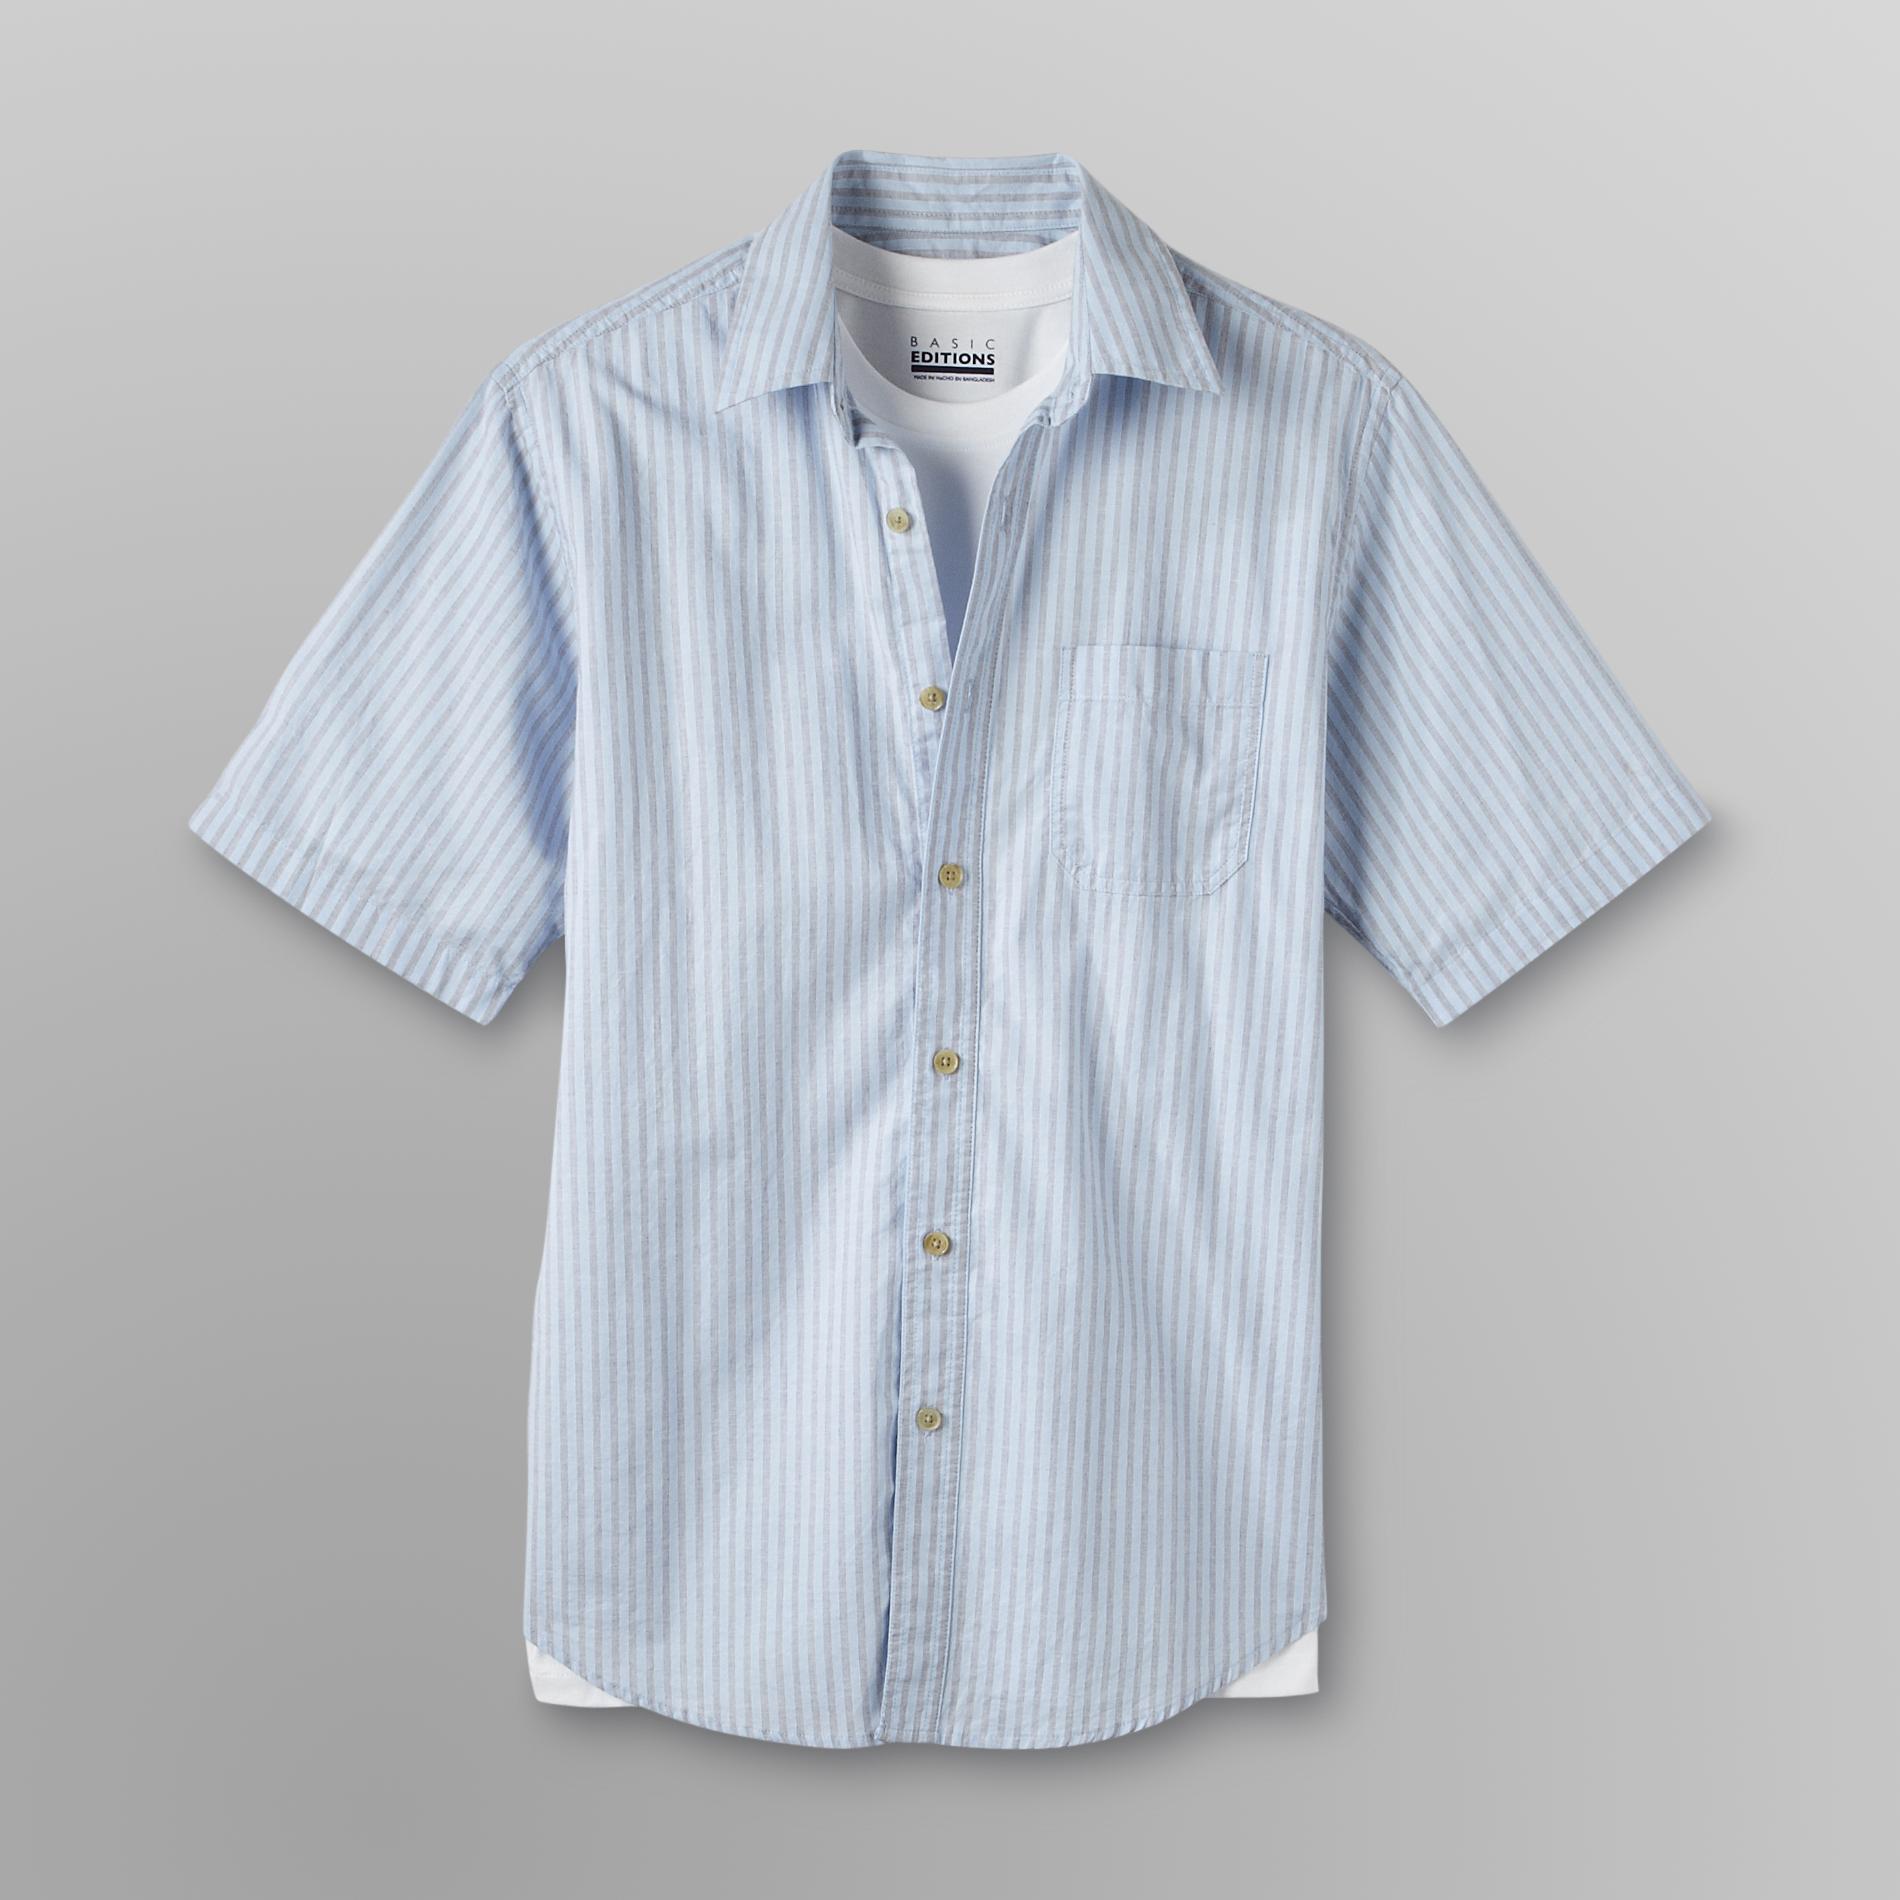 Basic Editions Men's Collared Shirt & T-Shirt - Striped